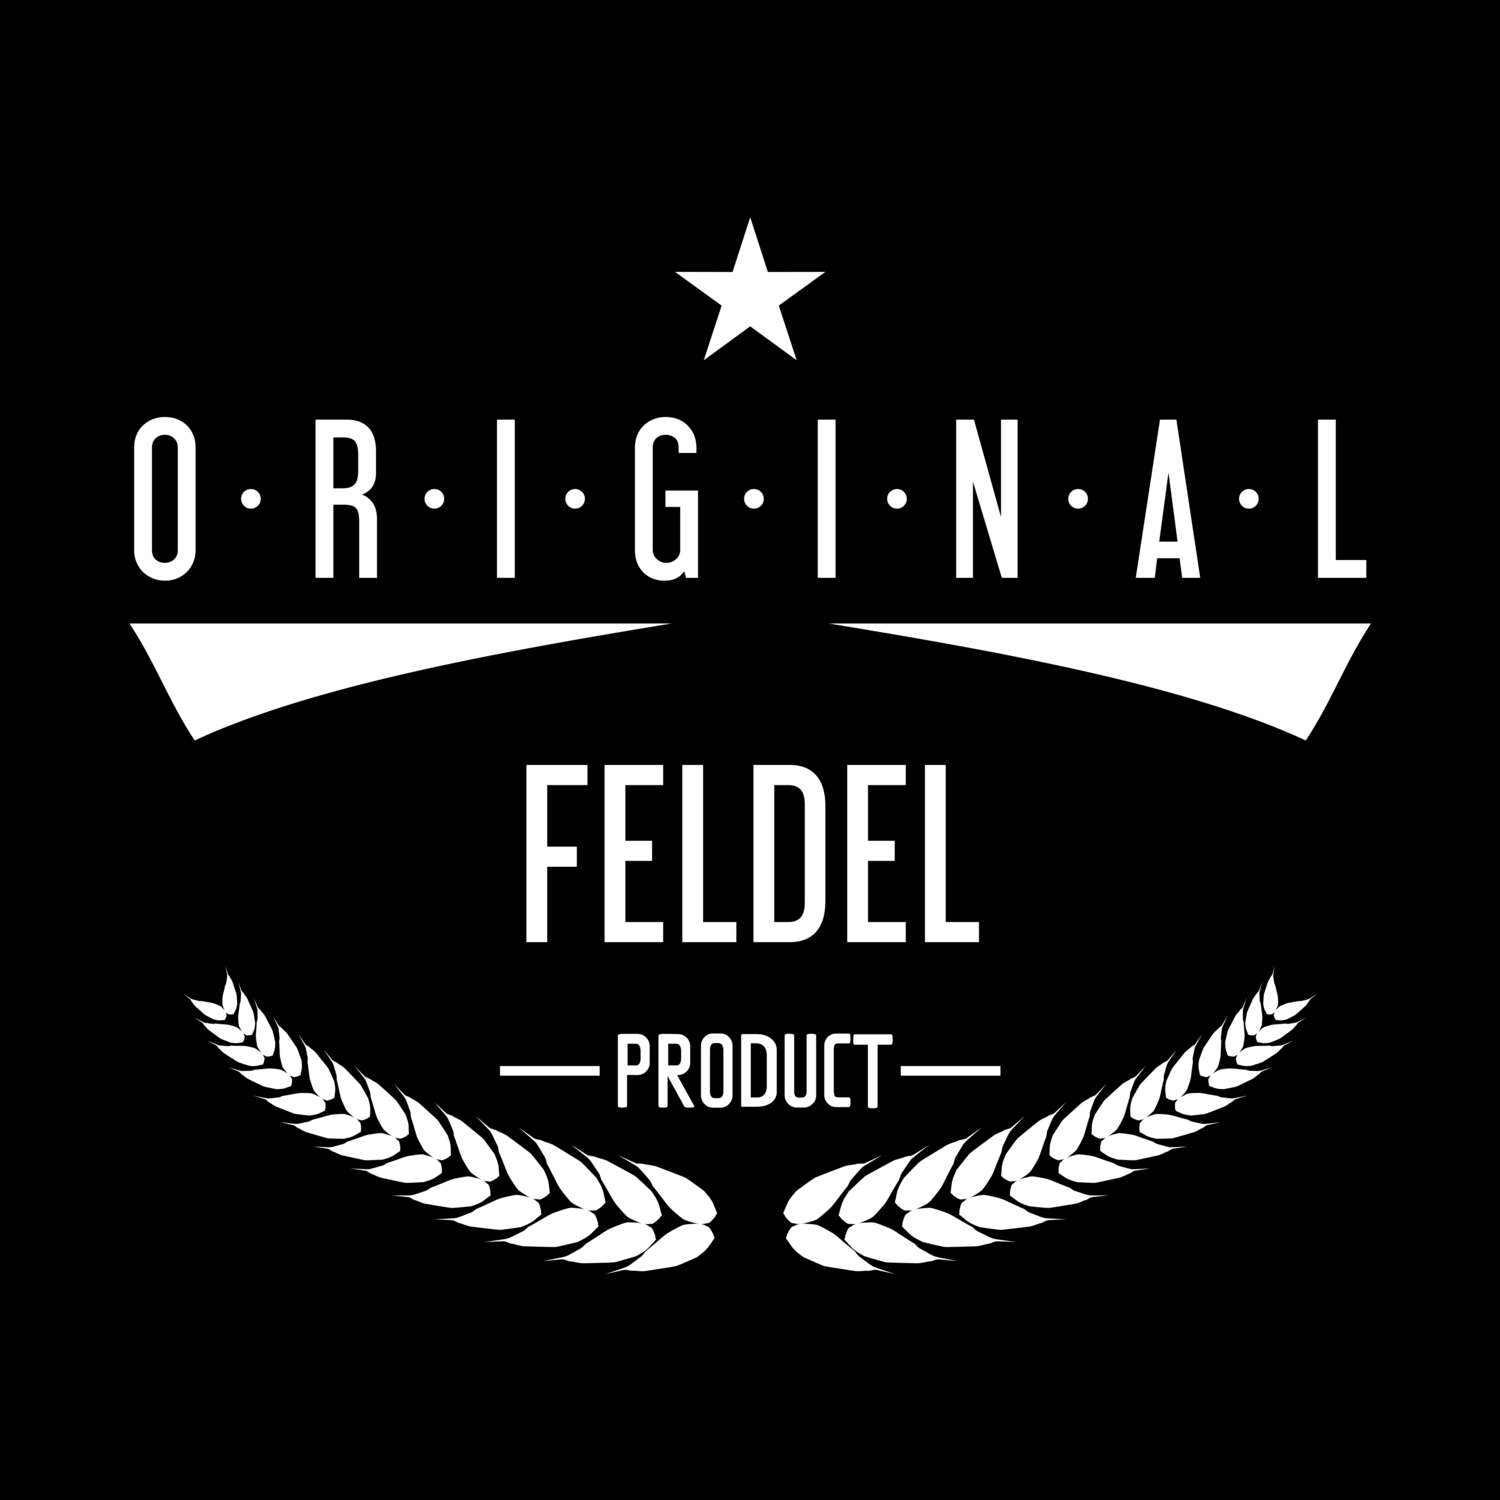 Feldel T-Shirt »Original Product«